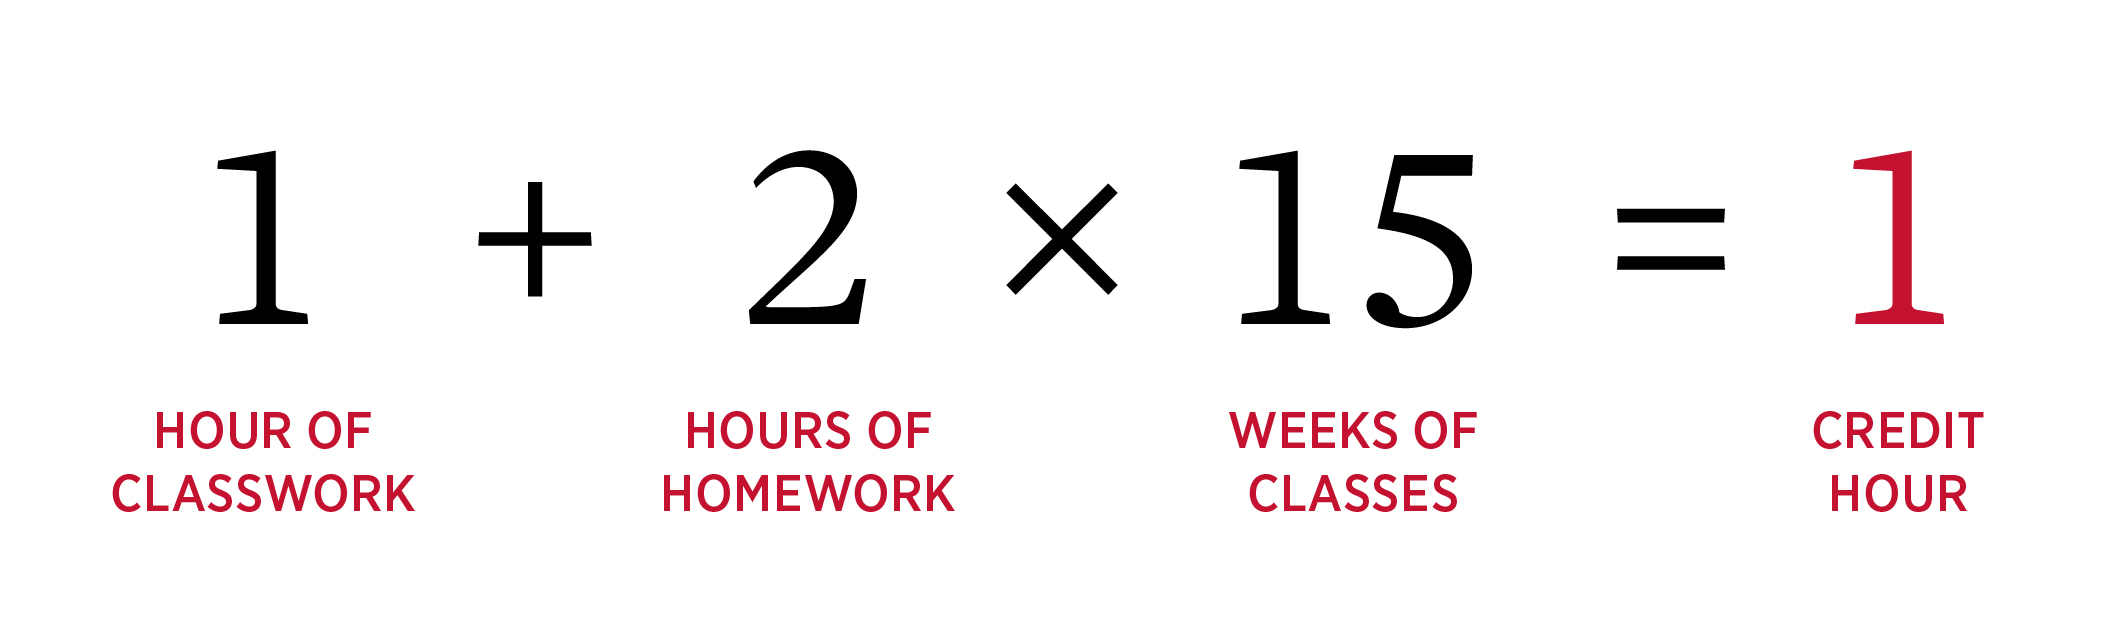 1 hour of classwork + 2 hours of homework x 15 weeks of classes = 1 credit hour.